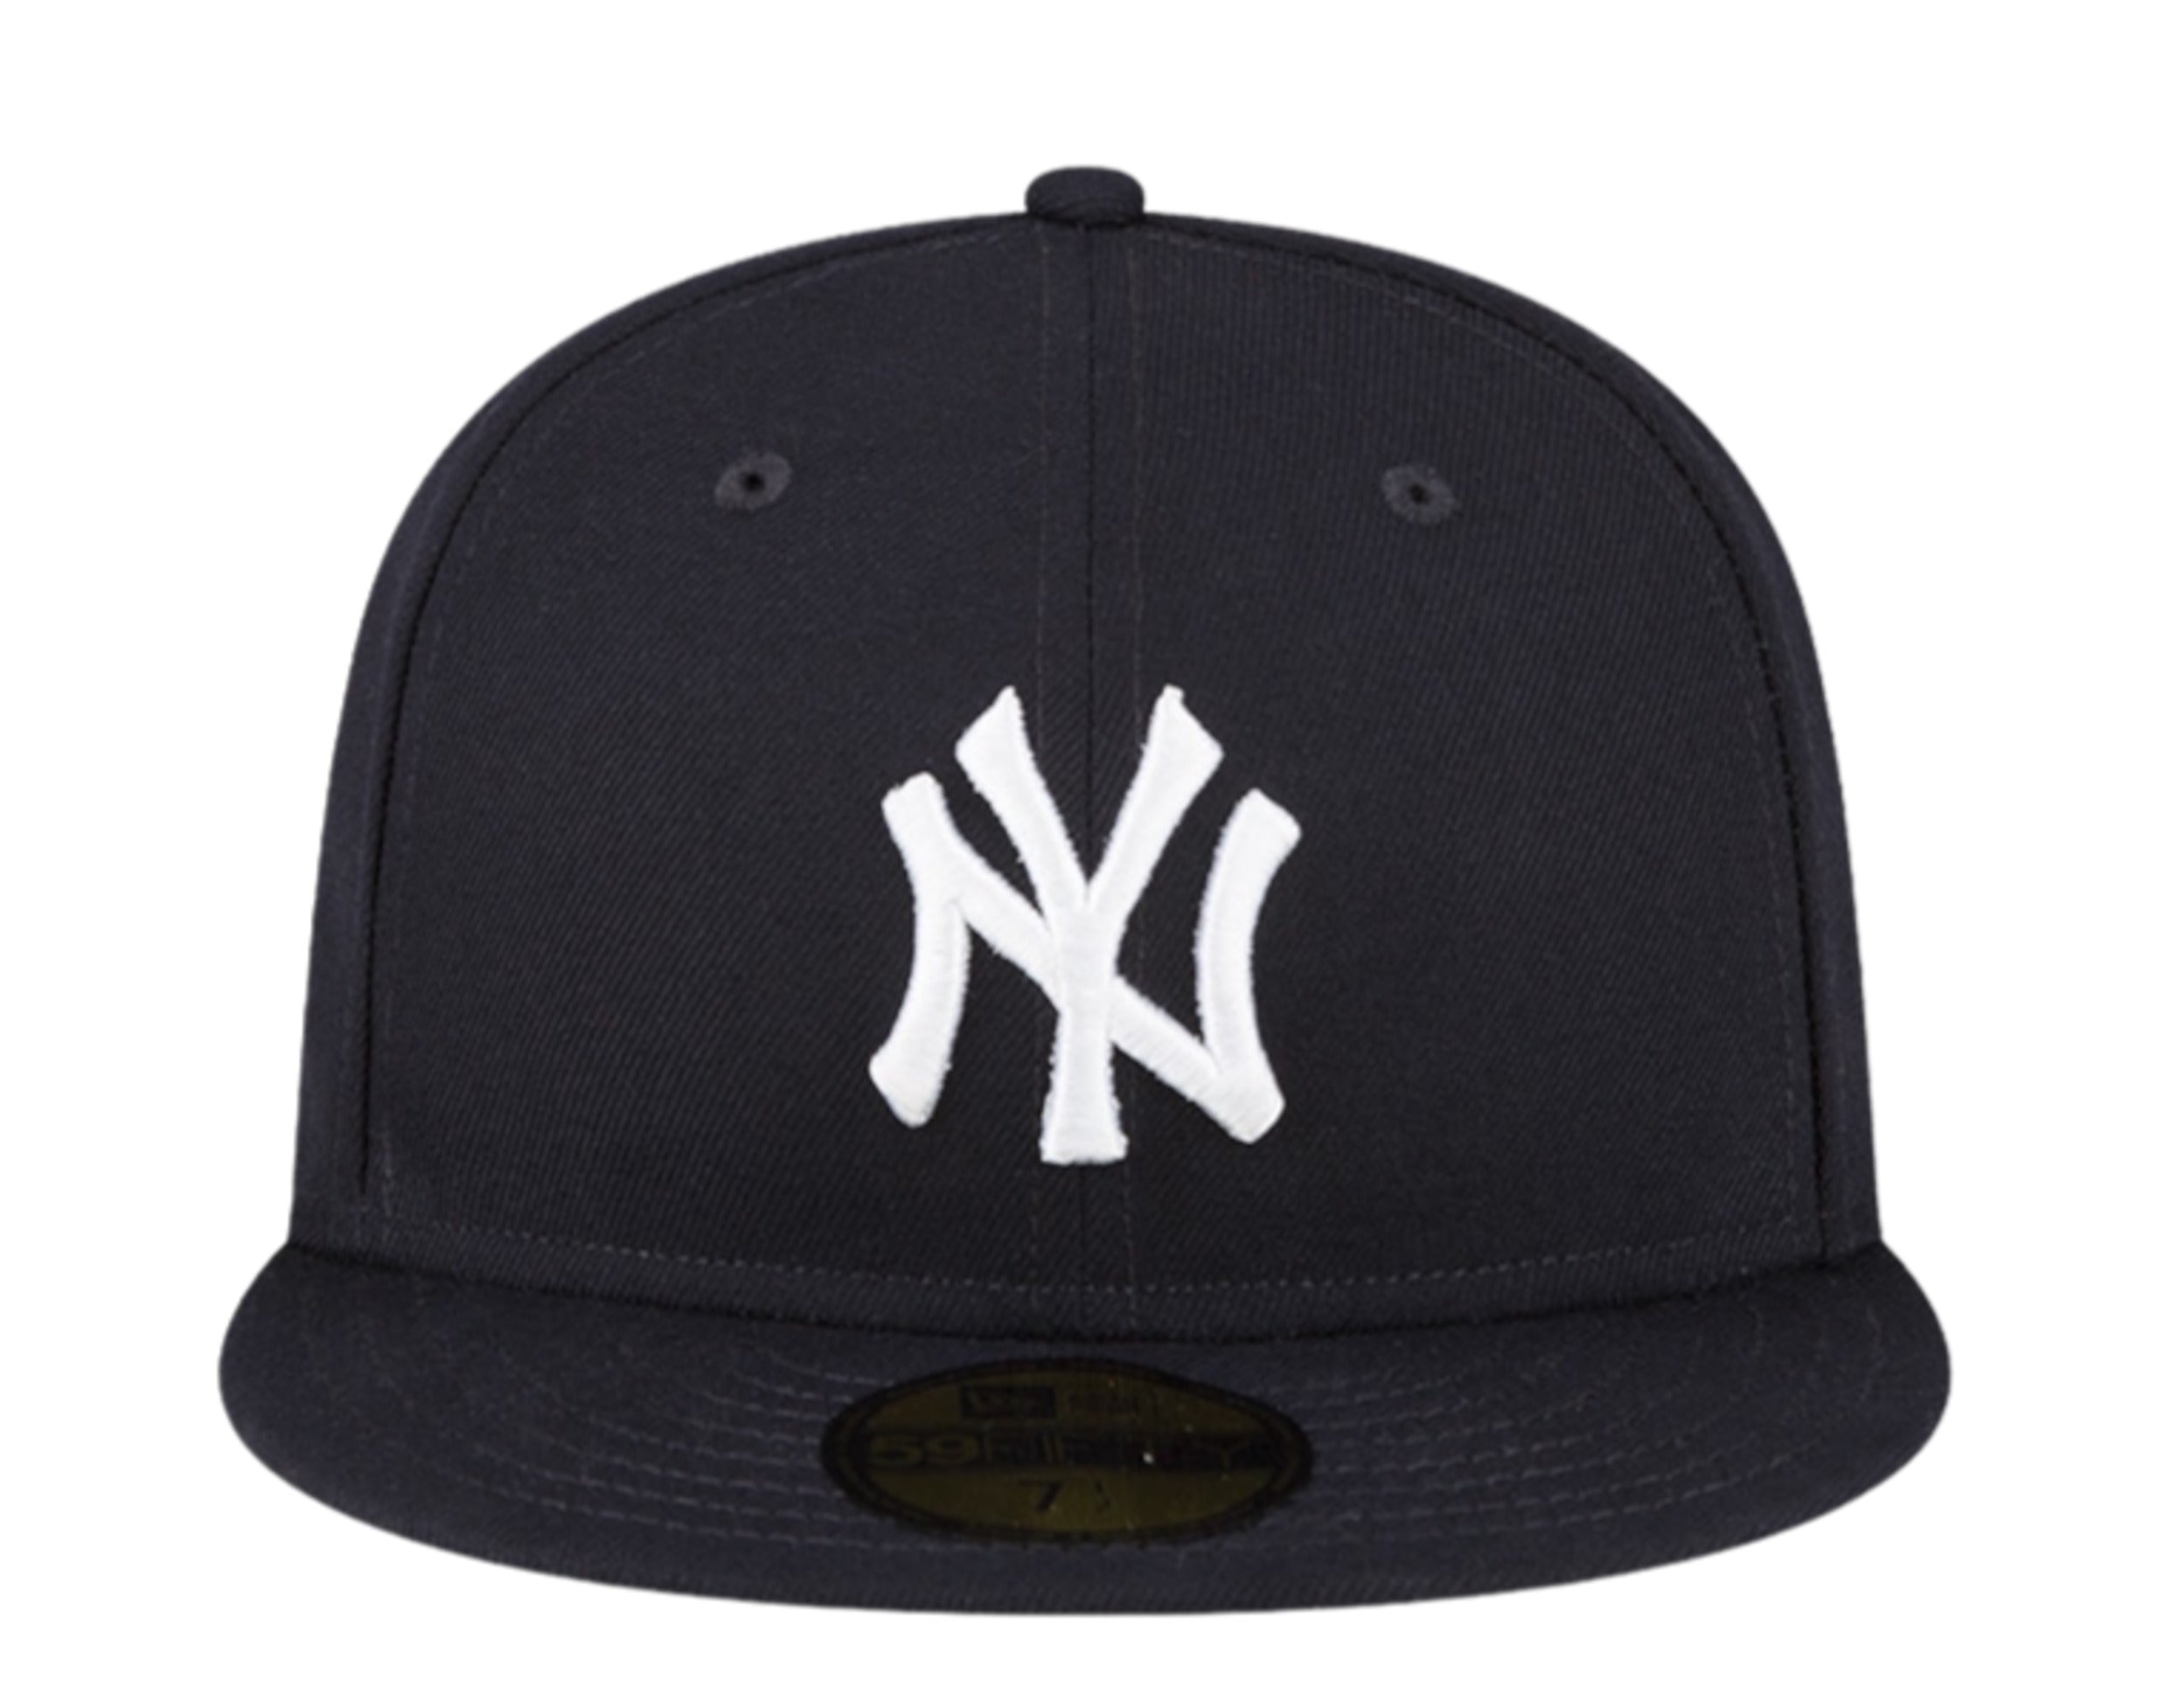 59Fifty OTC Yankees Cap by New Era